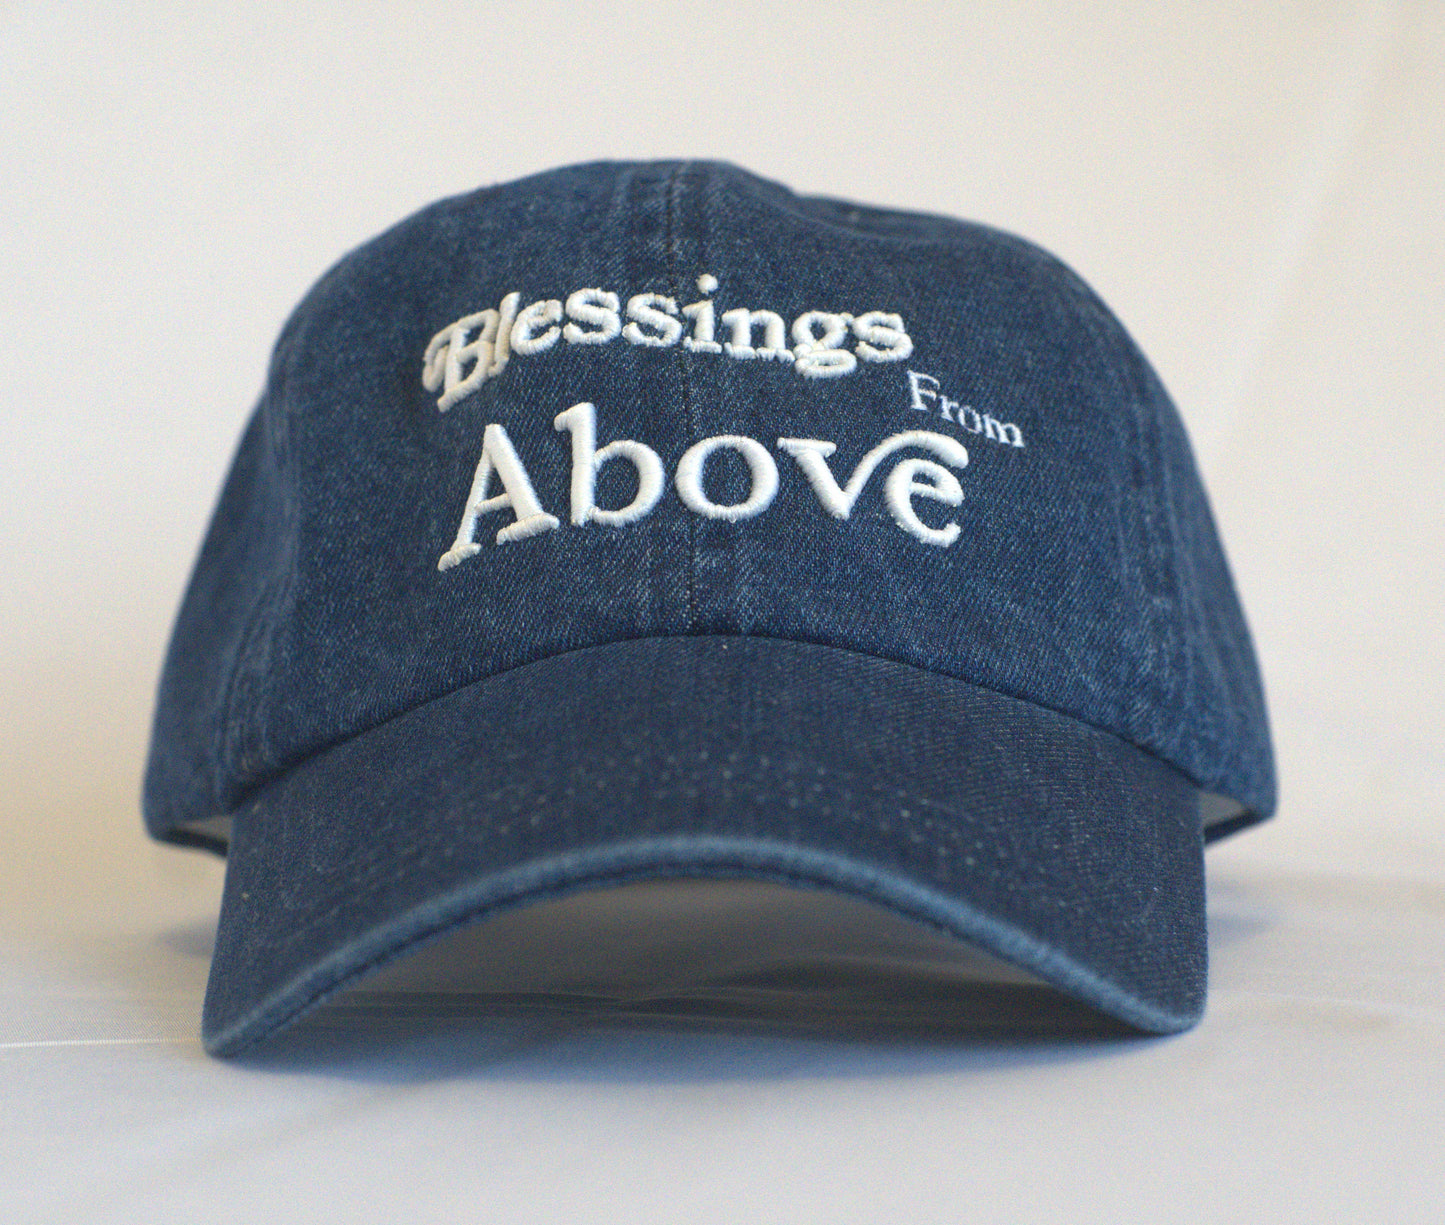 "Blessings from Above" - Denim Cap